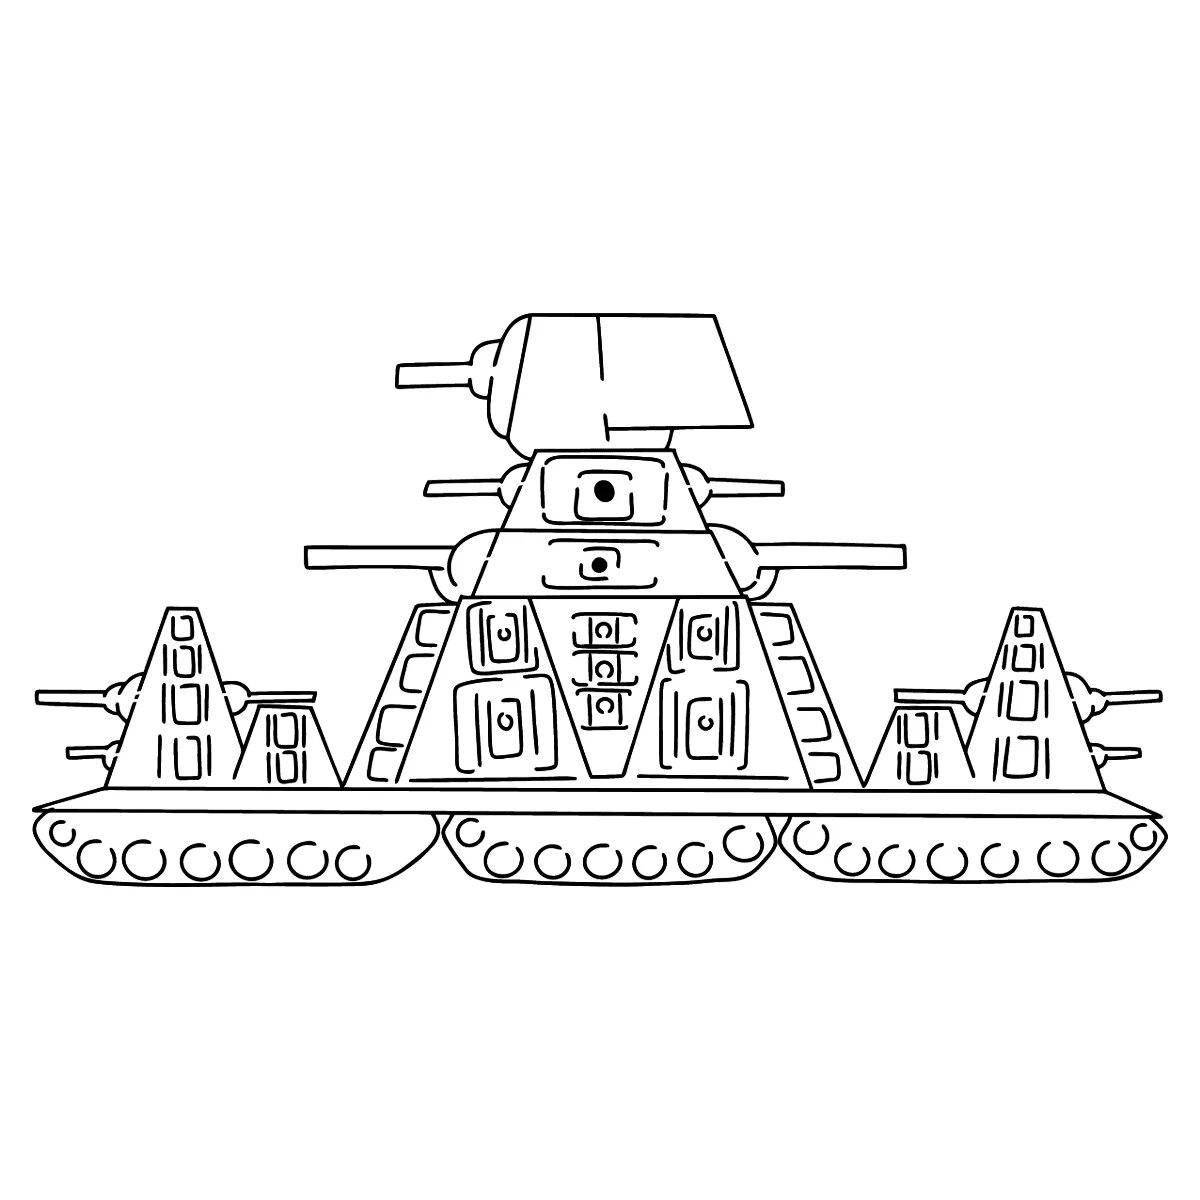 Impressive kv-6 tank coloring page